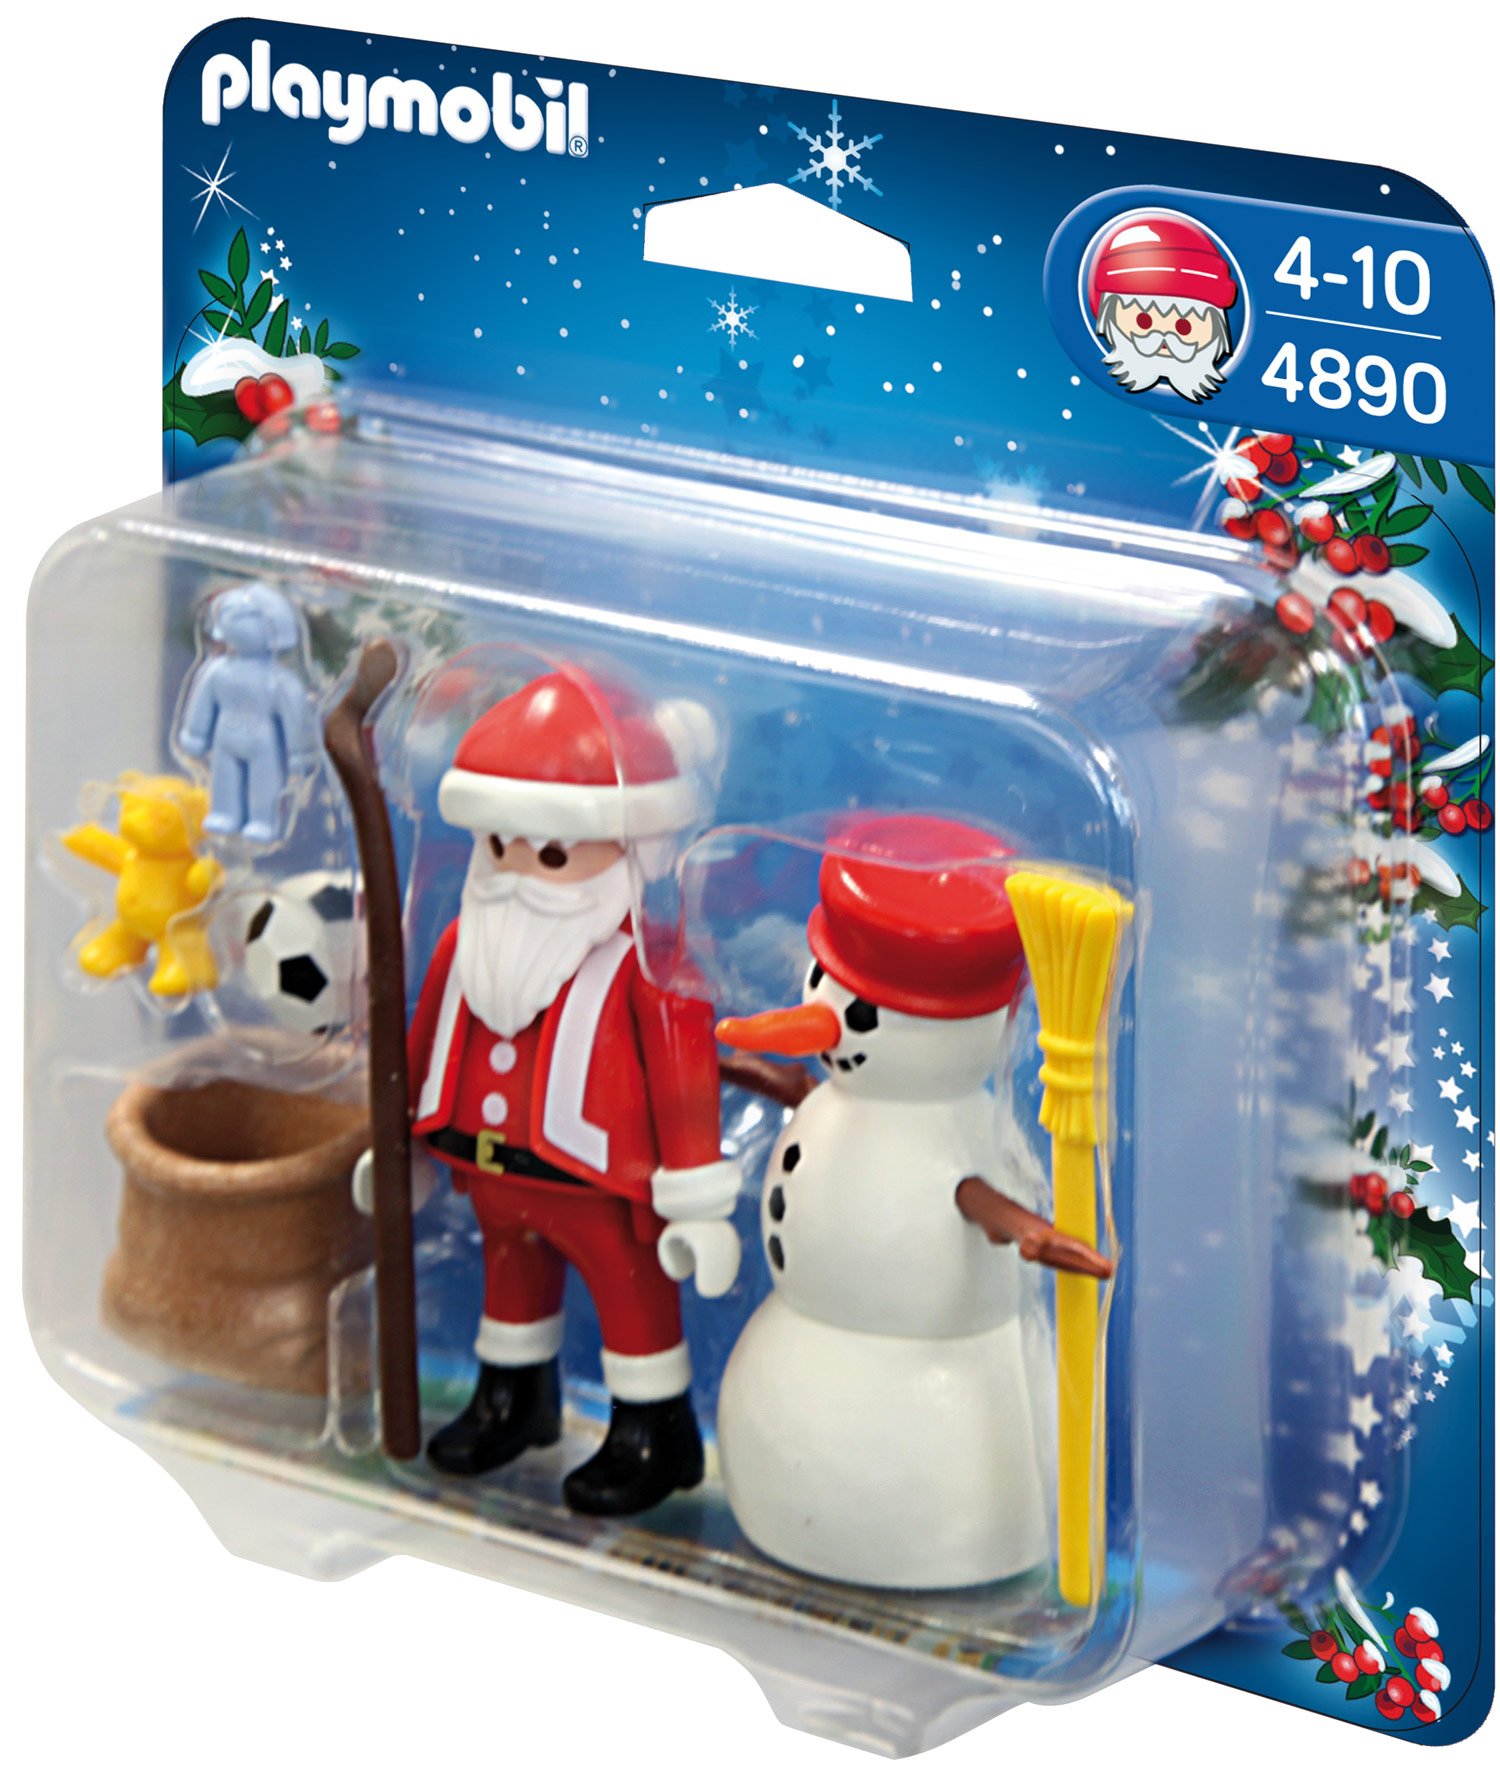 Playmobil Christmas Santa Claus With Snowman